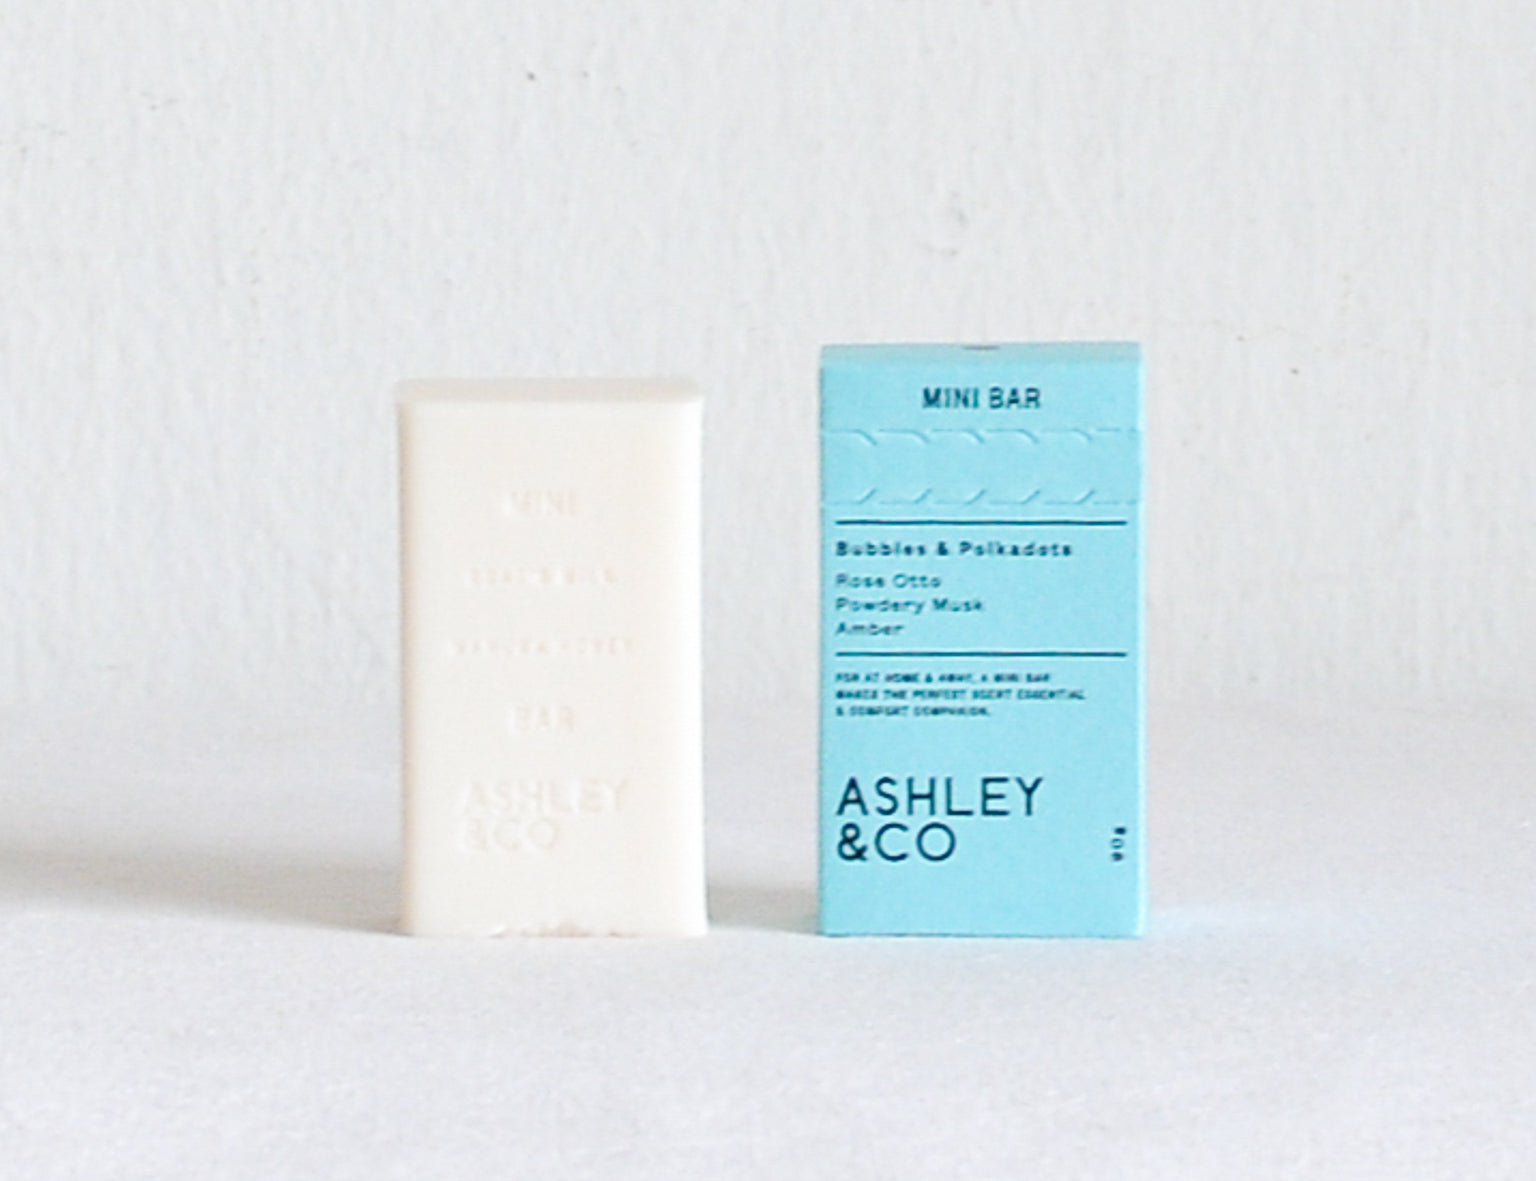 Ashley & Co Mini Soap Bar - Bubbles & Polkadots